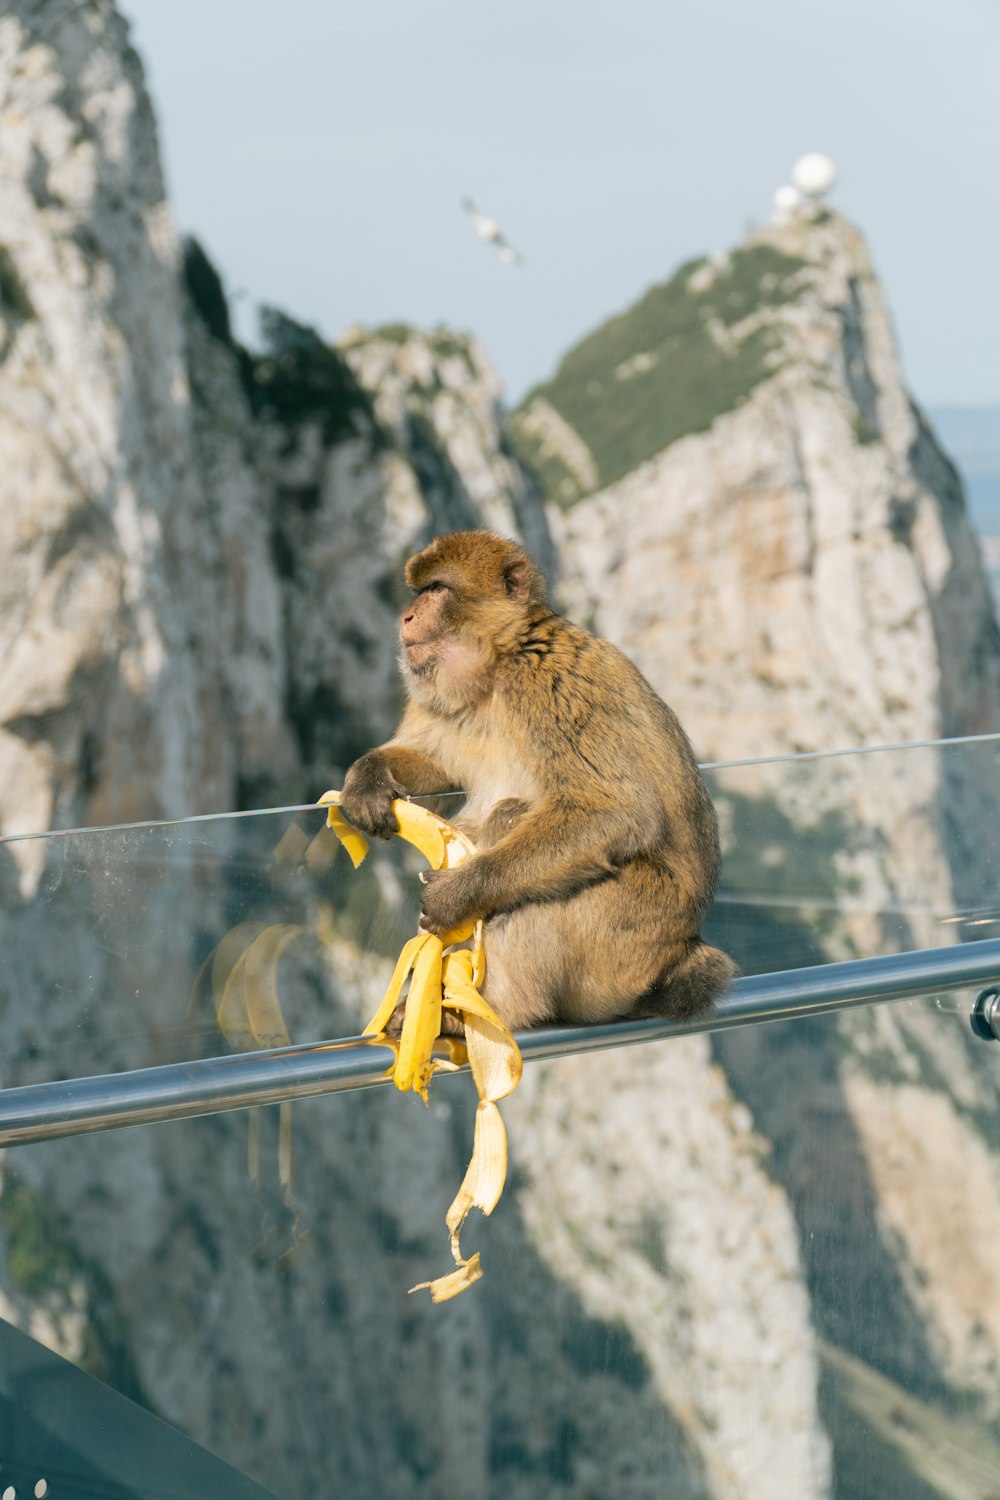 a monkey sitting on a railing eating a banana